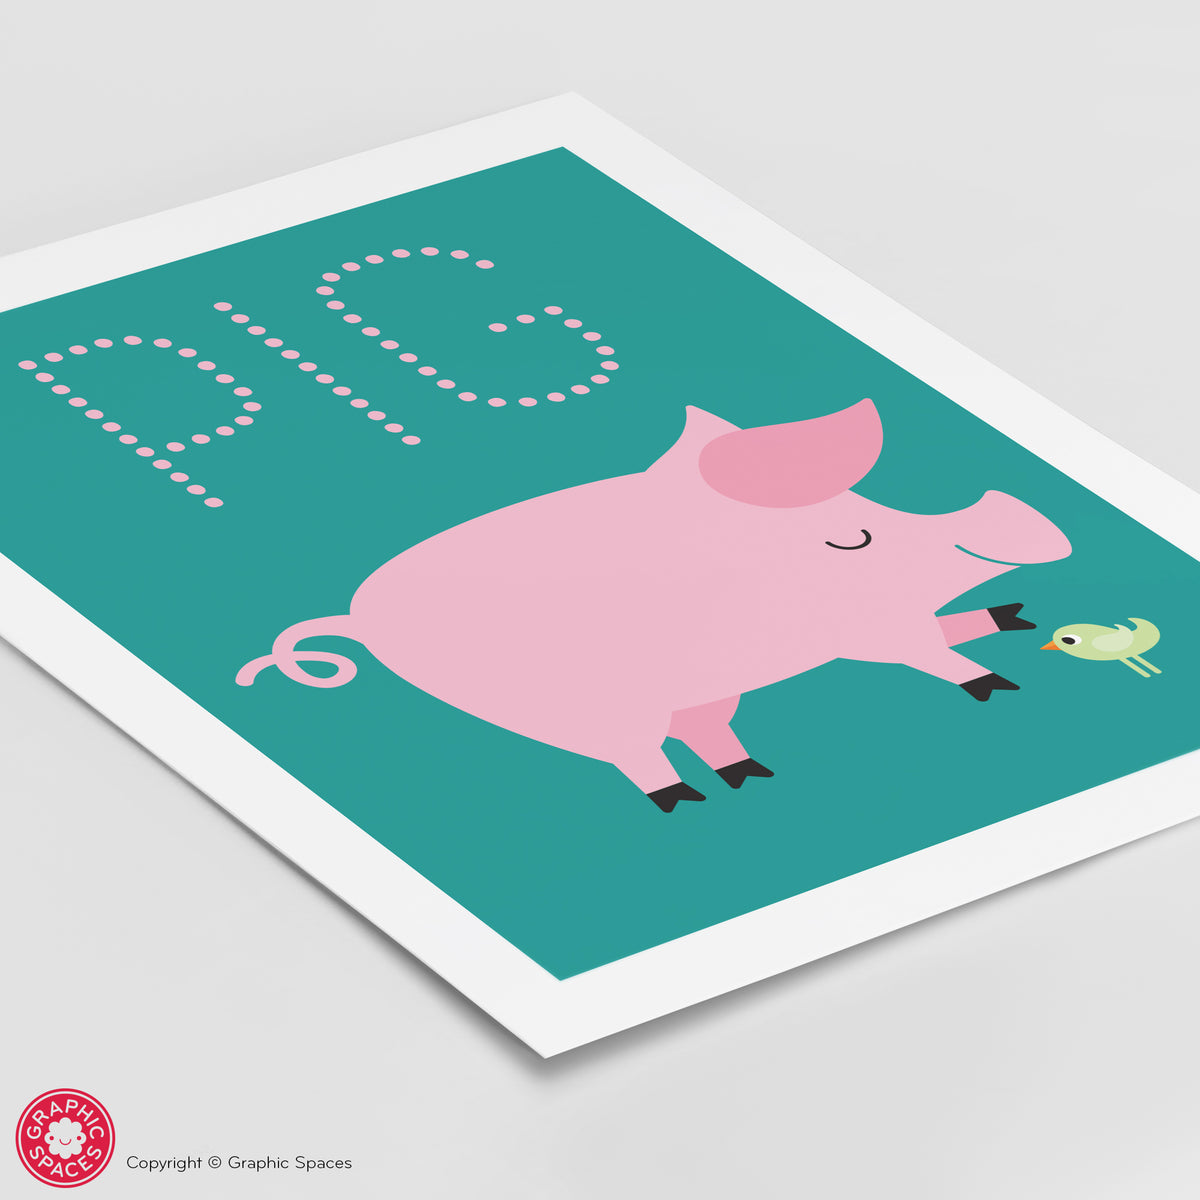 Pig Art Print